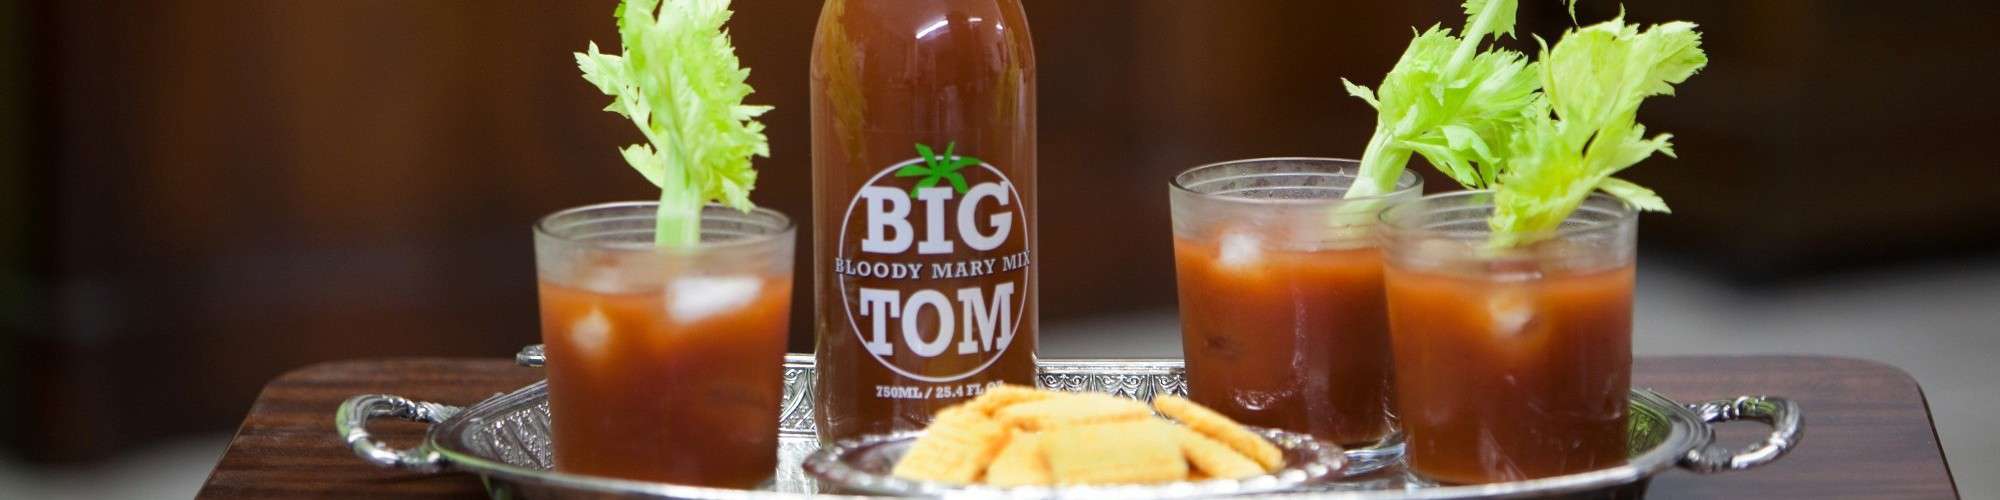 Big Tom Bloody Mary Mix